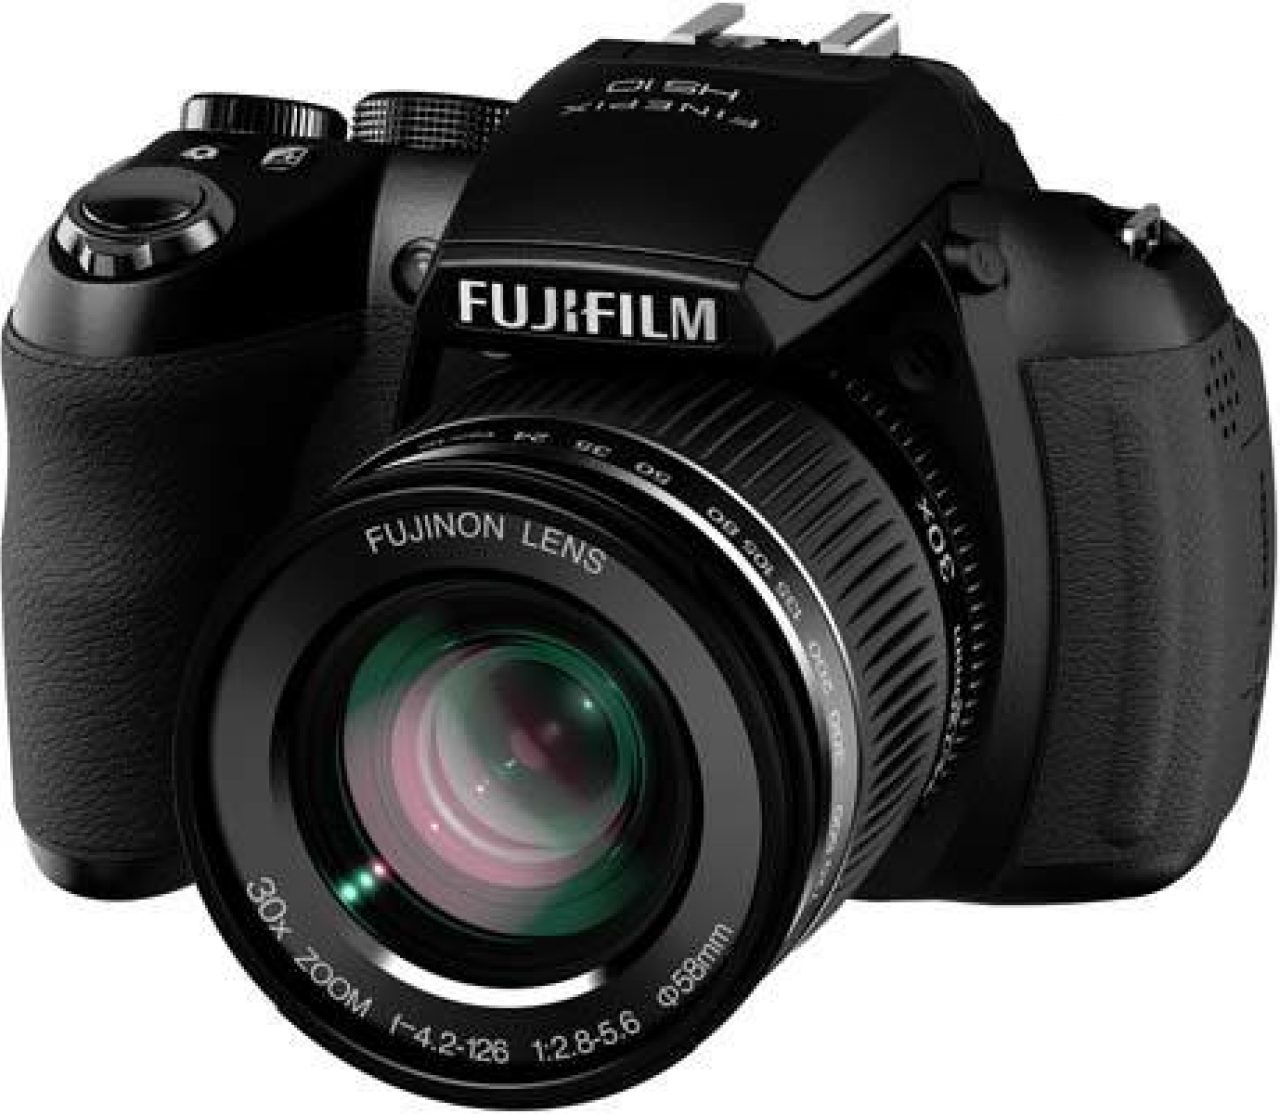 Fujifilm Finepix S1 Pro Digital Camera Memory Card 16GB CompactFlash Memory Card